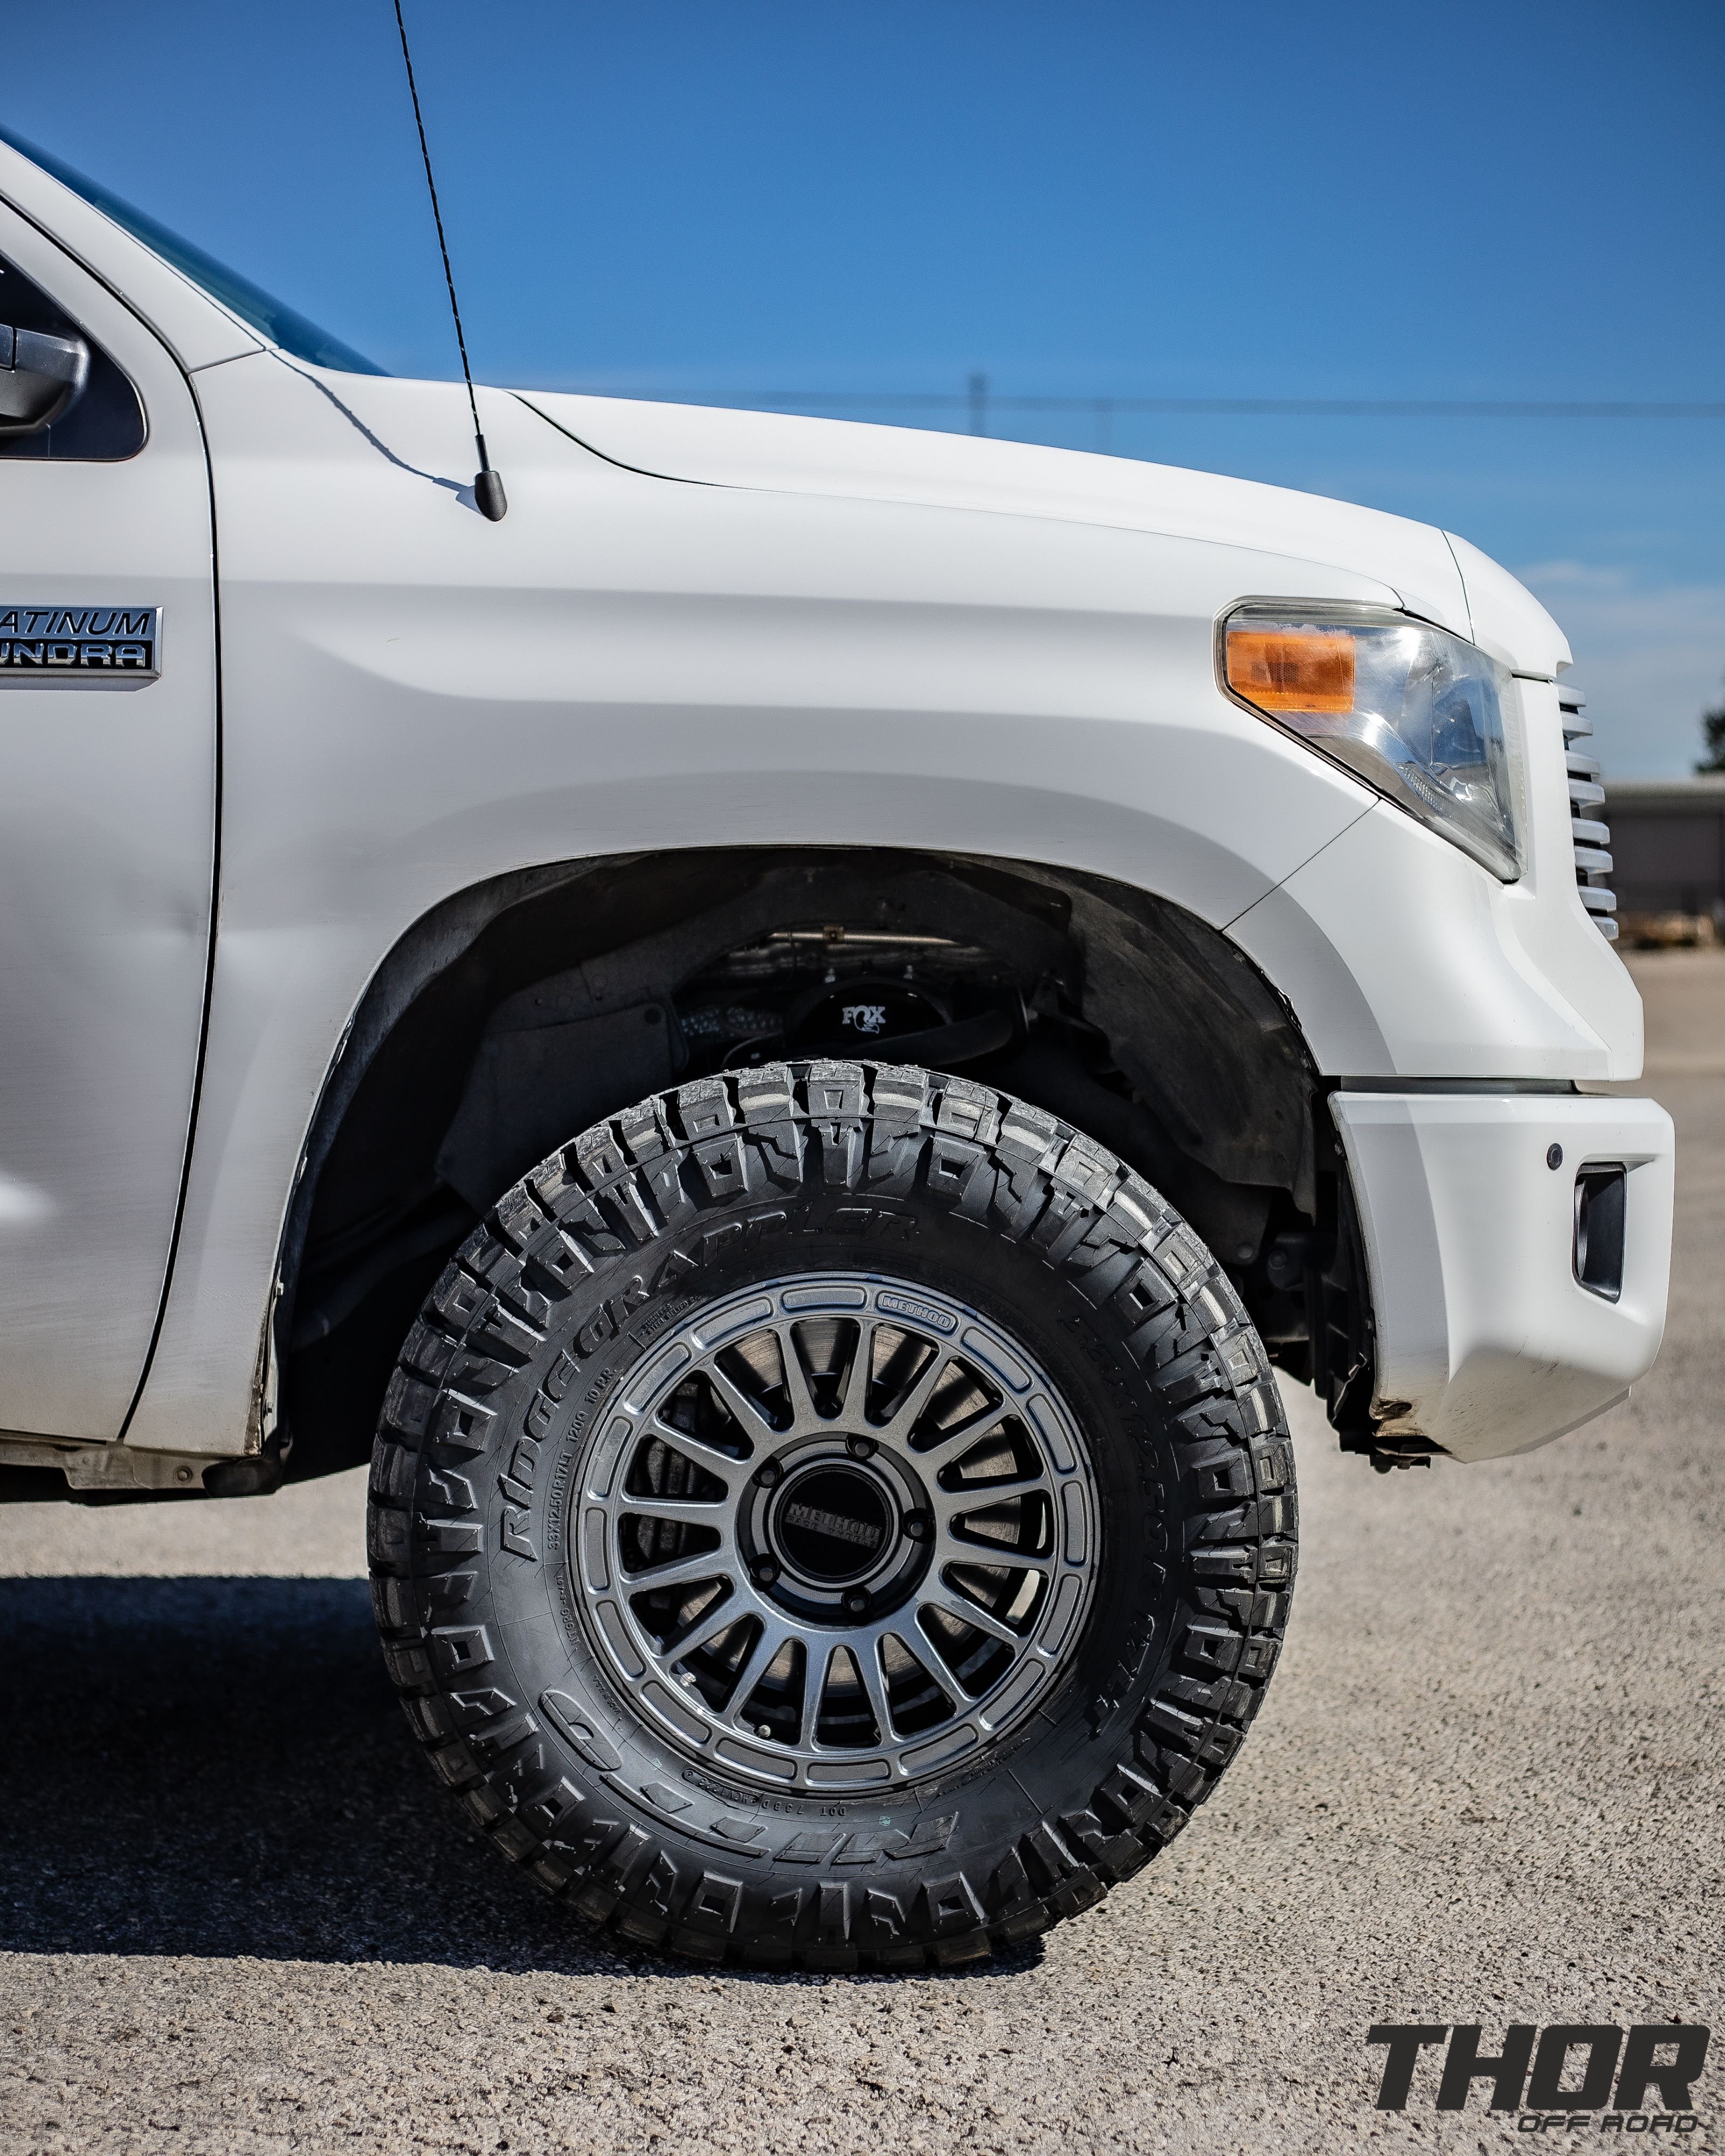 2016 Toyota Tundra Platinum in White with Fox 2.0 Leveling Kit, Method Racing MR 314 Titanium Gloss 17" Wheels, 33x12.50R17 Nitto Ridge Grappler Tires